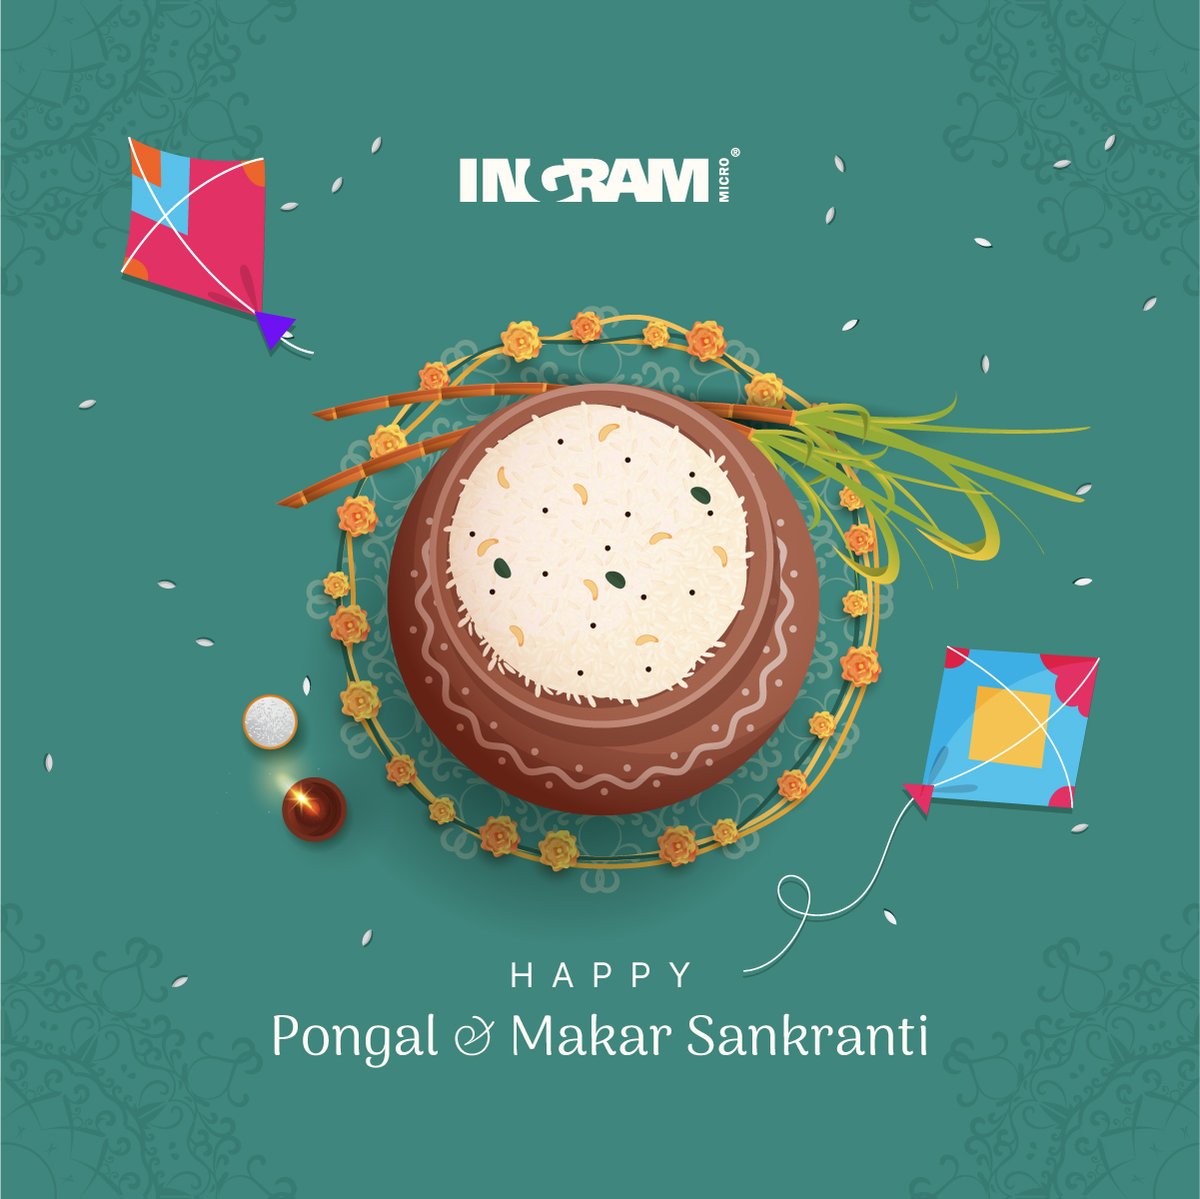 Happy Pongal and Makar Sankranti! #IngramMicroindia